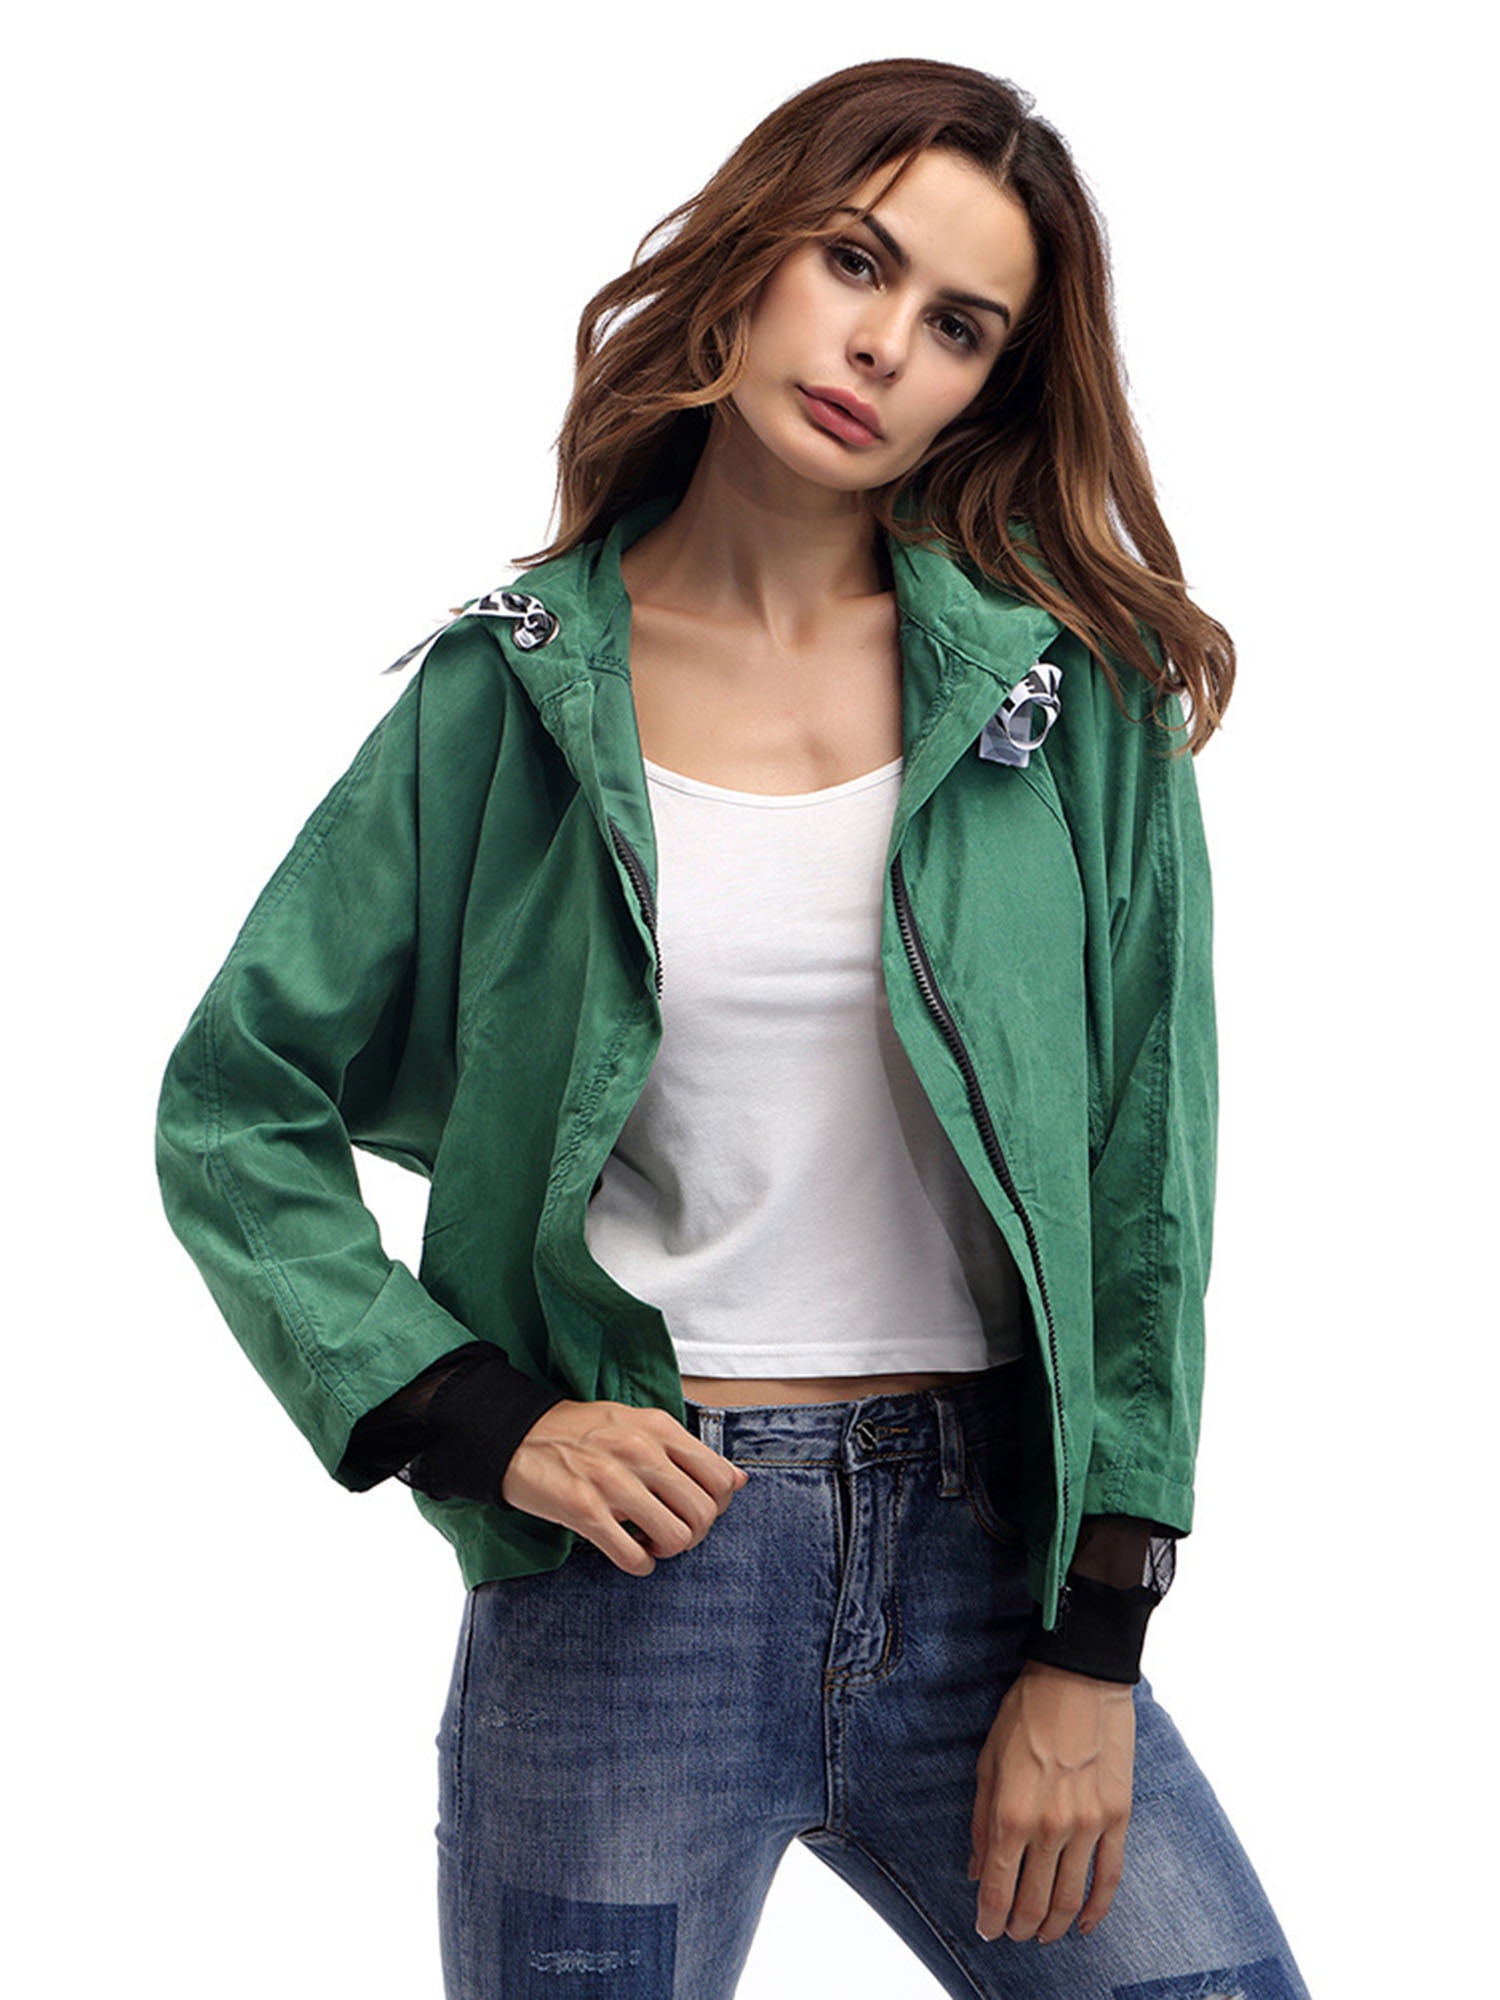 Phoebe Cat - Long Sleeve Jacket for Women, Women's Casual Zip Up Hoodie ...